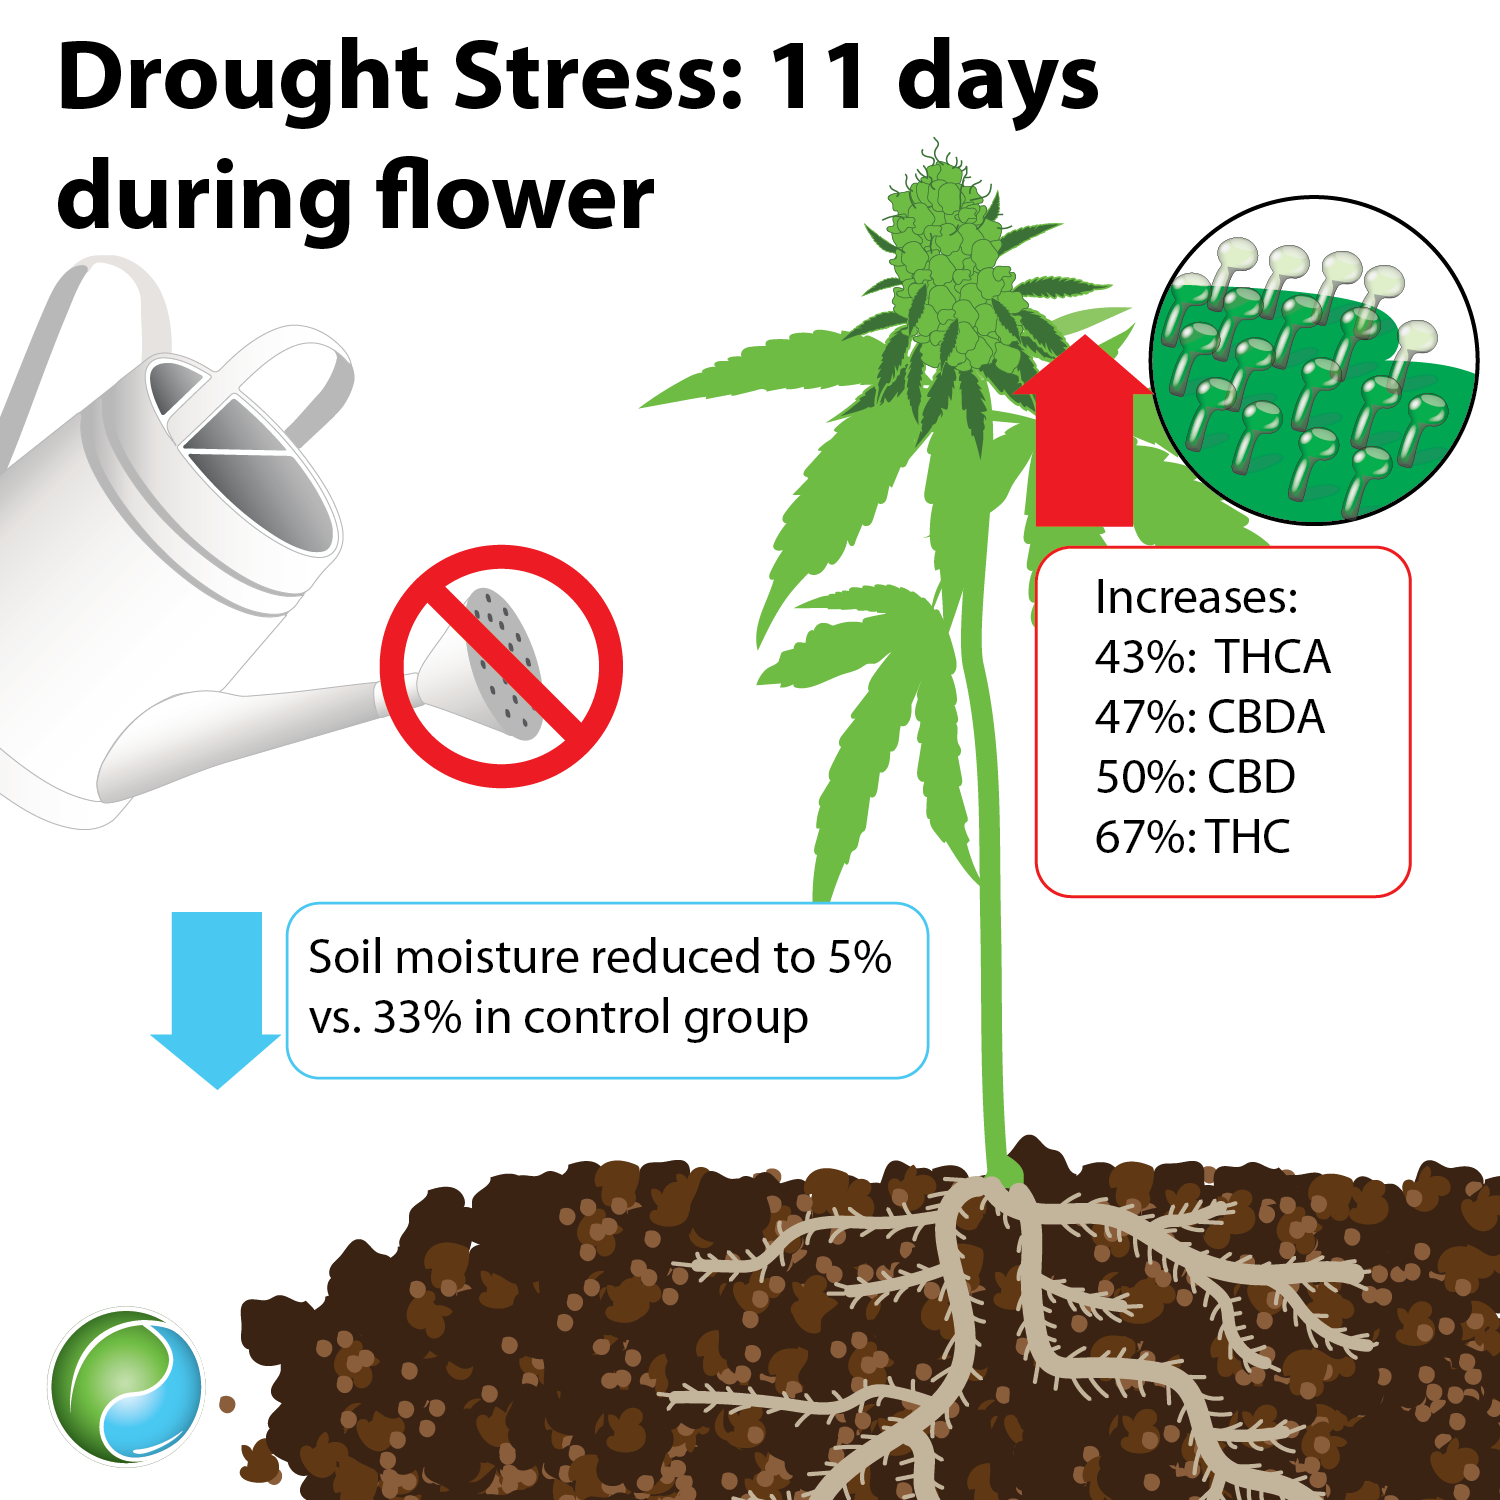 Drought Stress Benefits